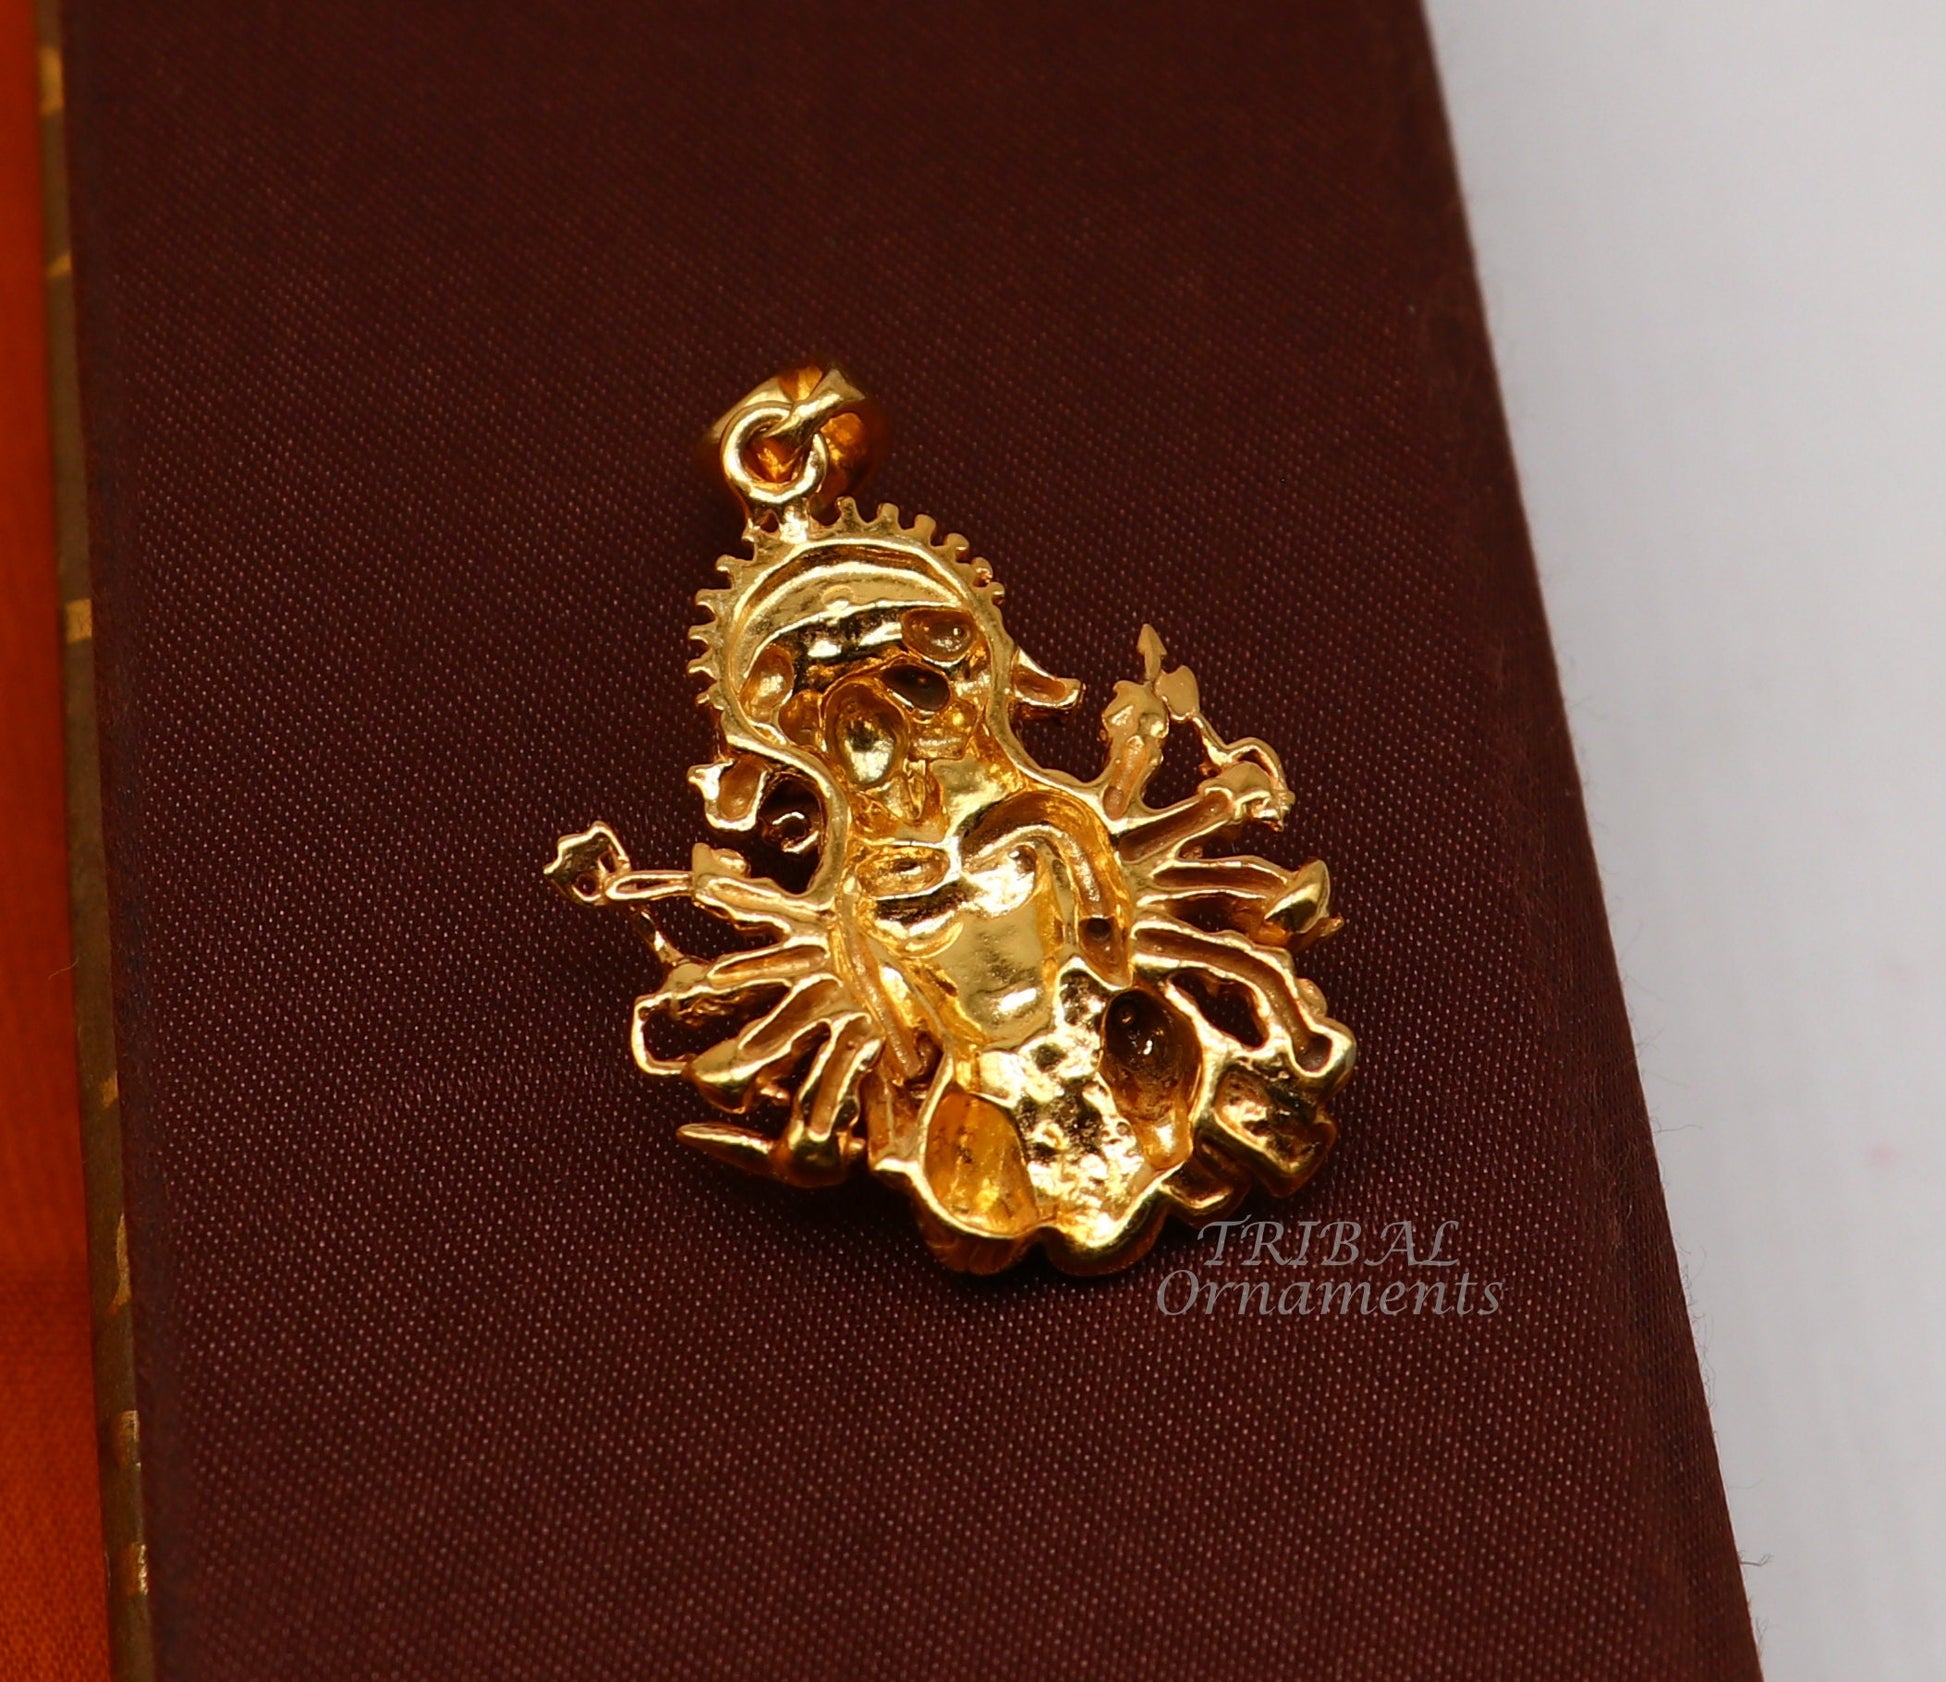 Pure 925 sterling silver handmade Hindu god Lord Panchmukhi Hanuman Gold polished pendant, amazing designer pendant unisex jewelry nsp543 - TRIBAL ORNAMENTS